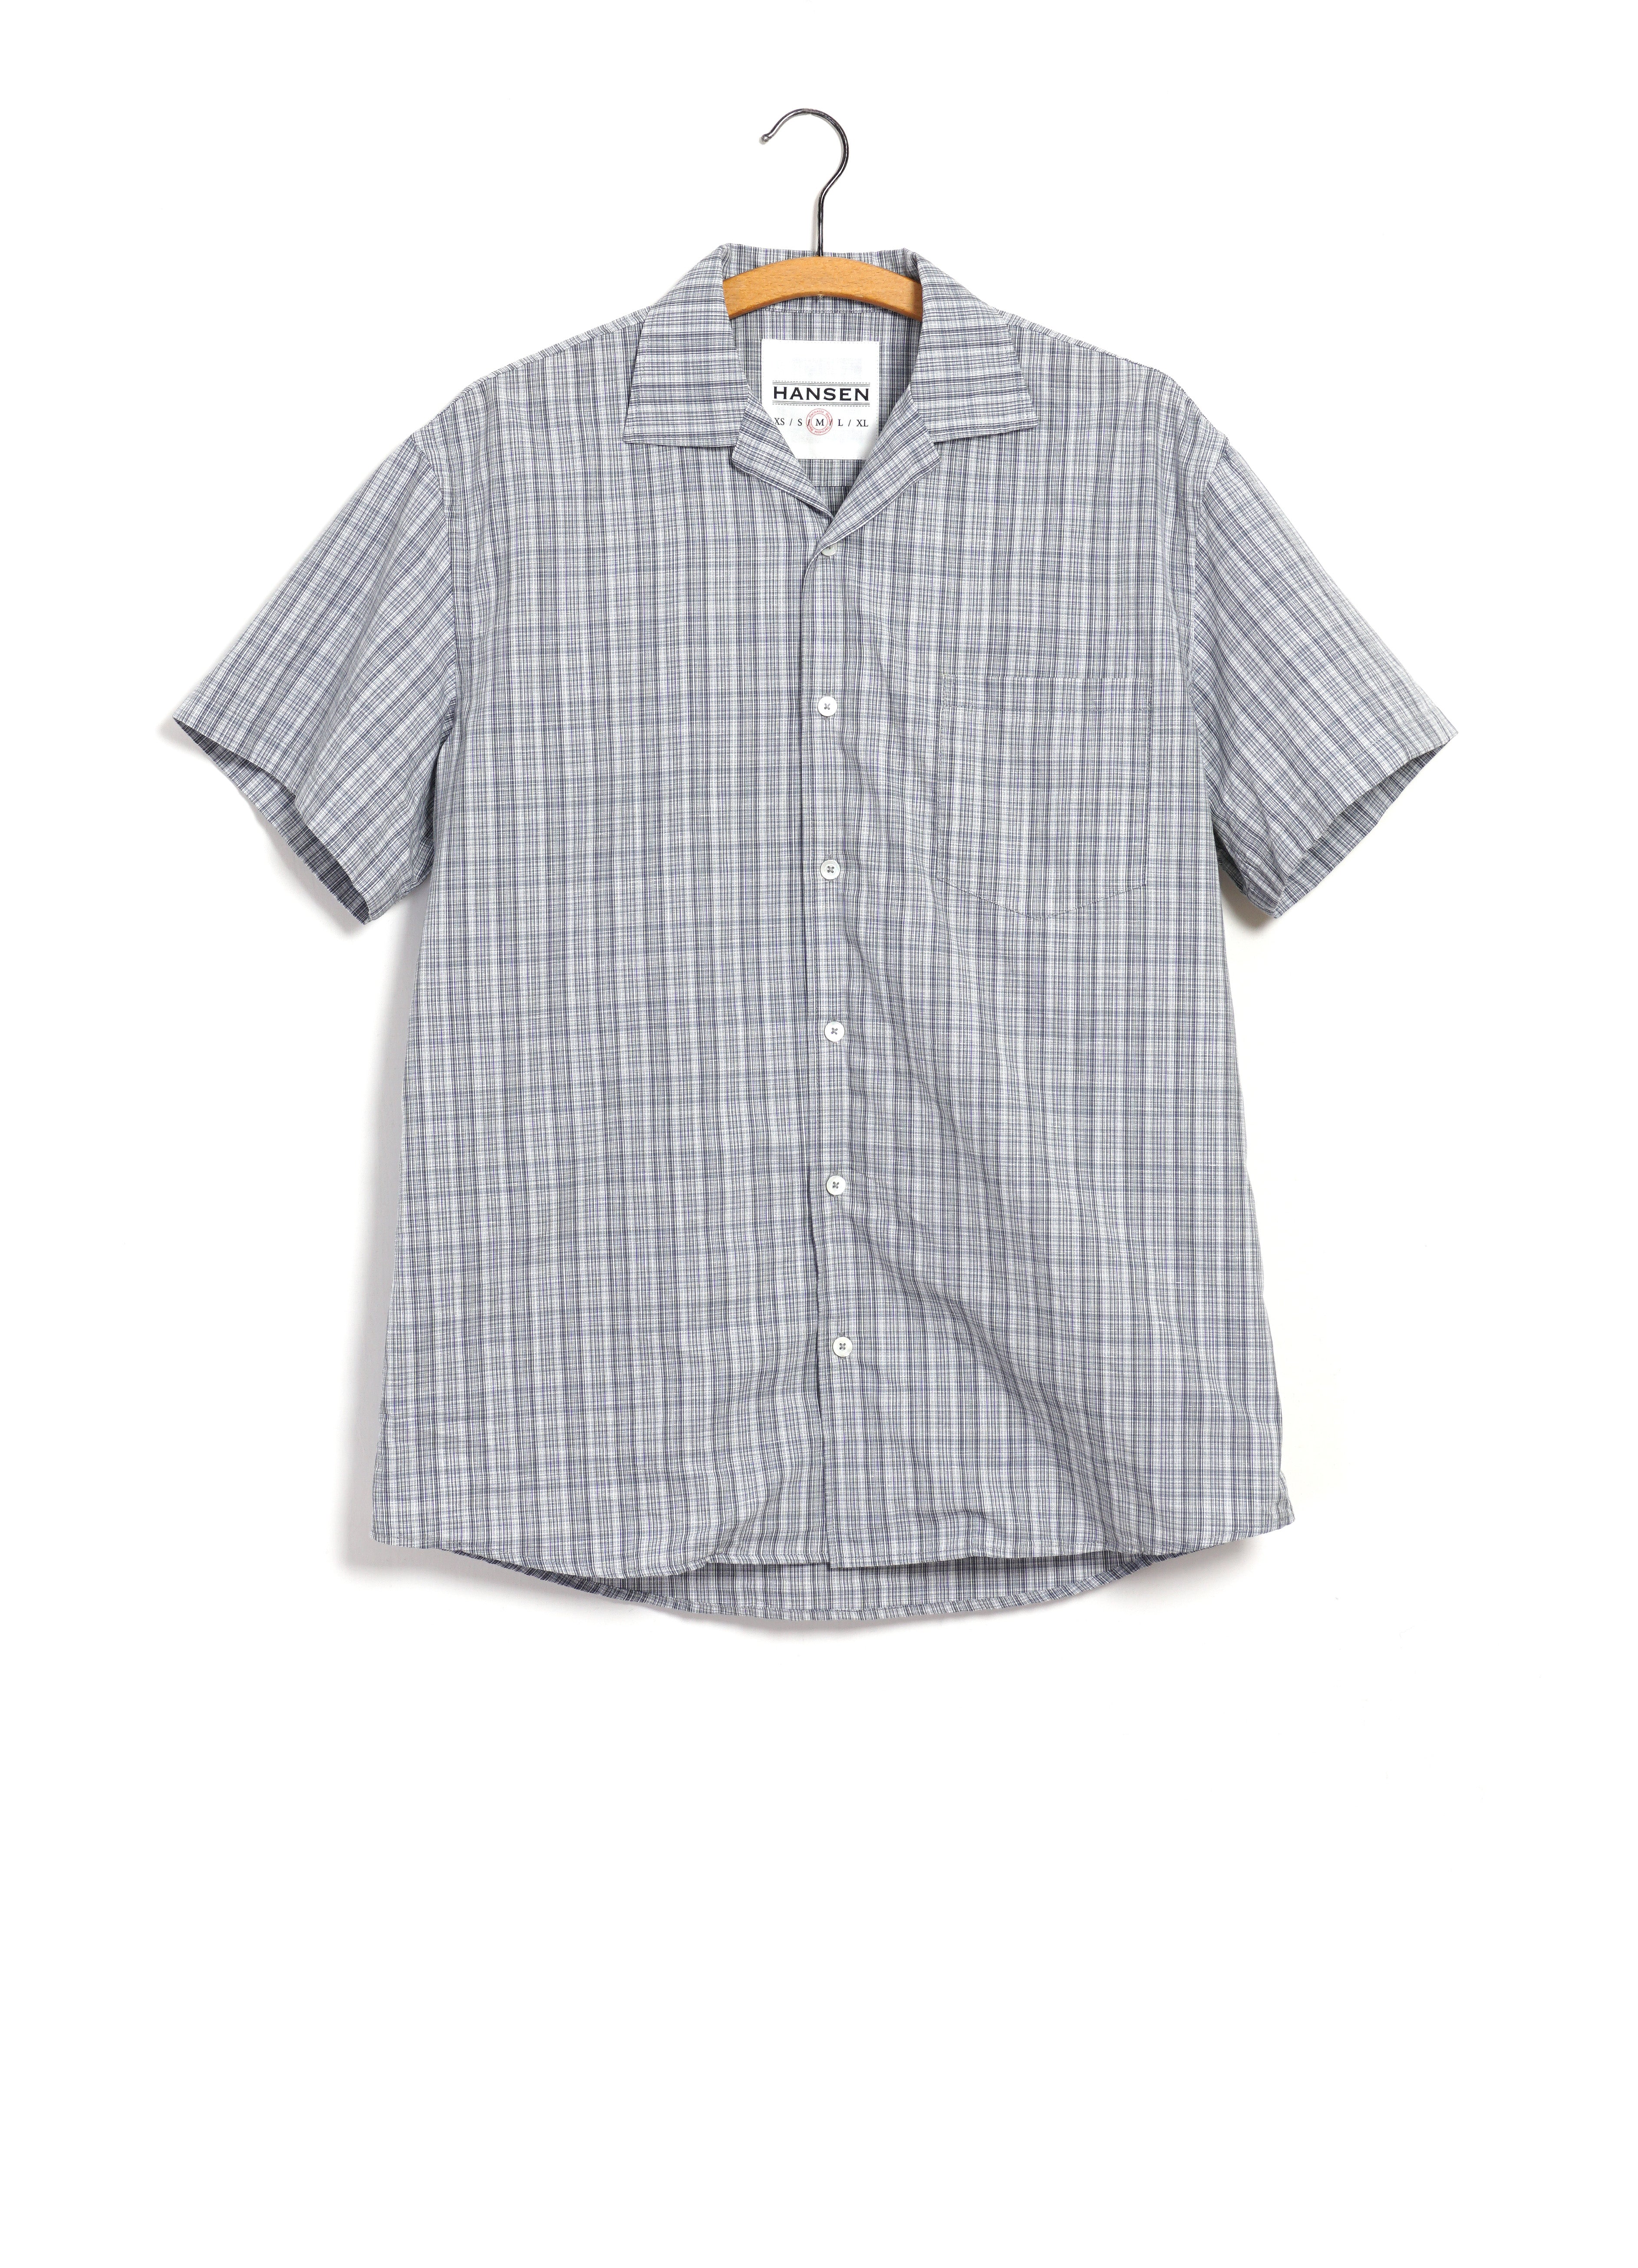 JONNY | Short Sleeve Shirt | Small Blue Checks